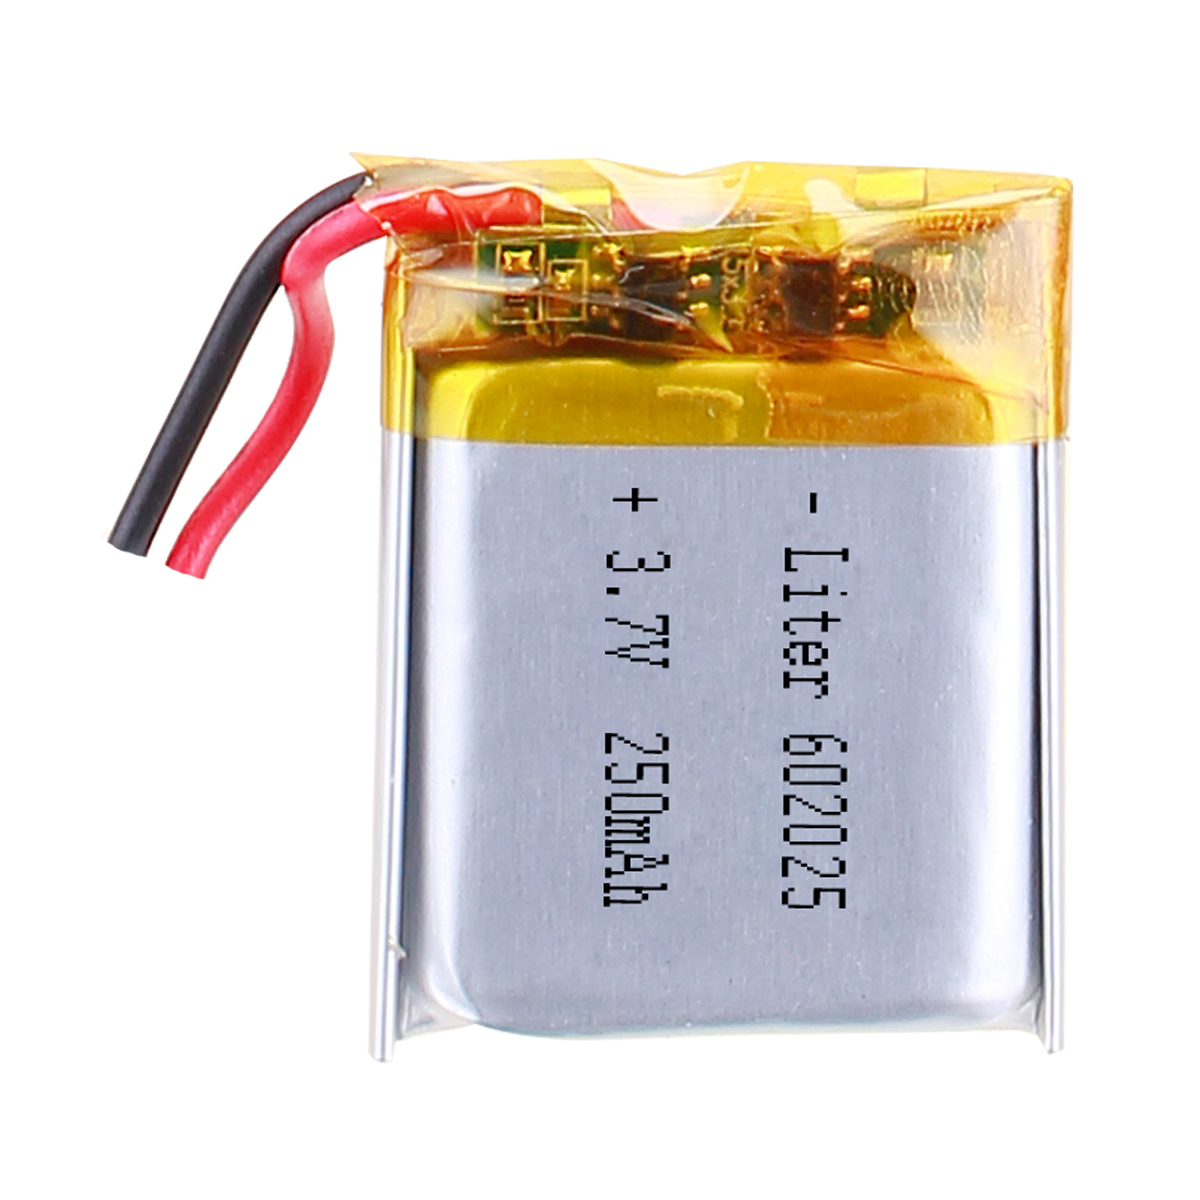 0.925Wh 3.7V LiPo Battery 250mAh 602025